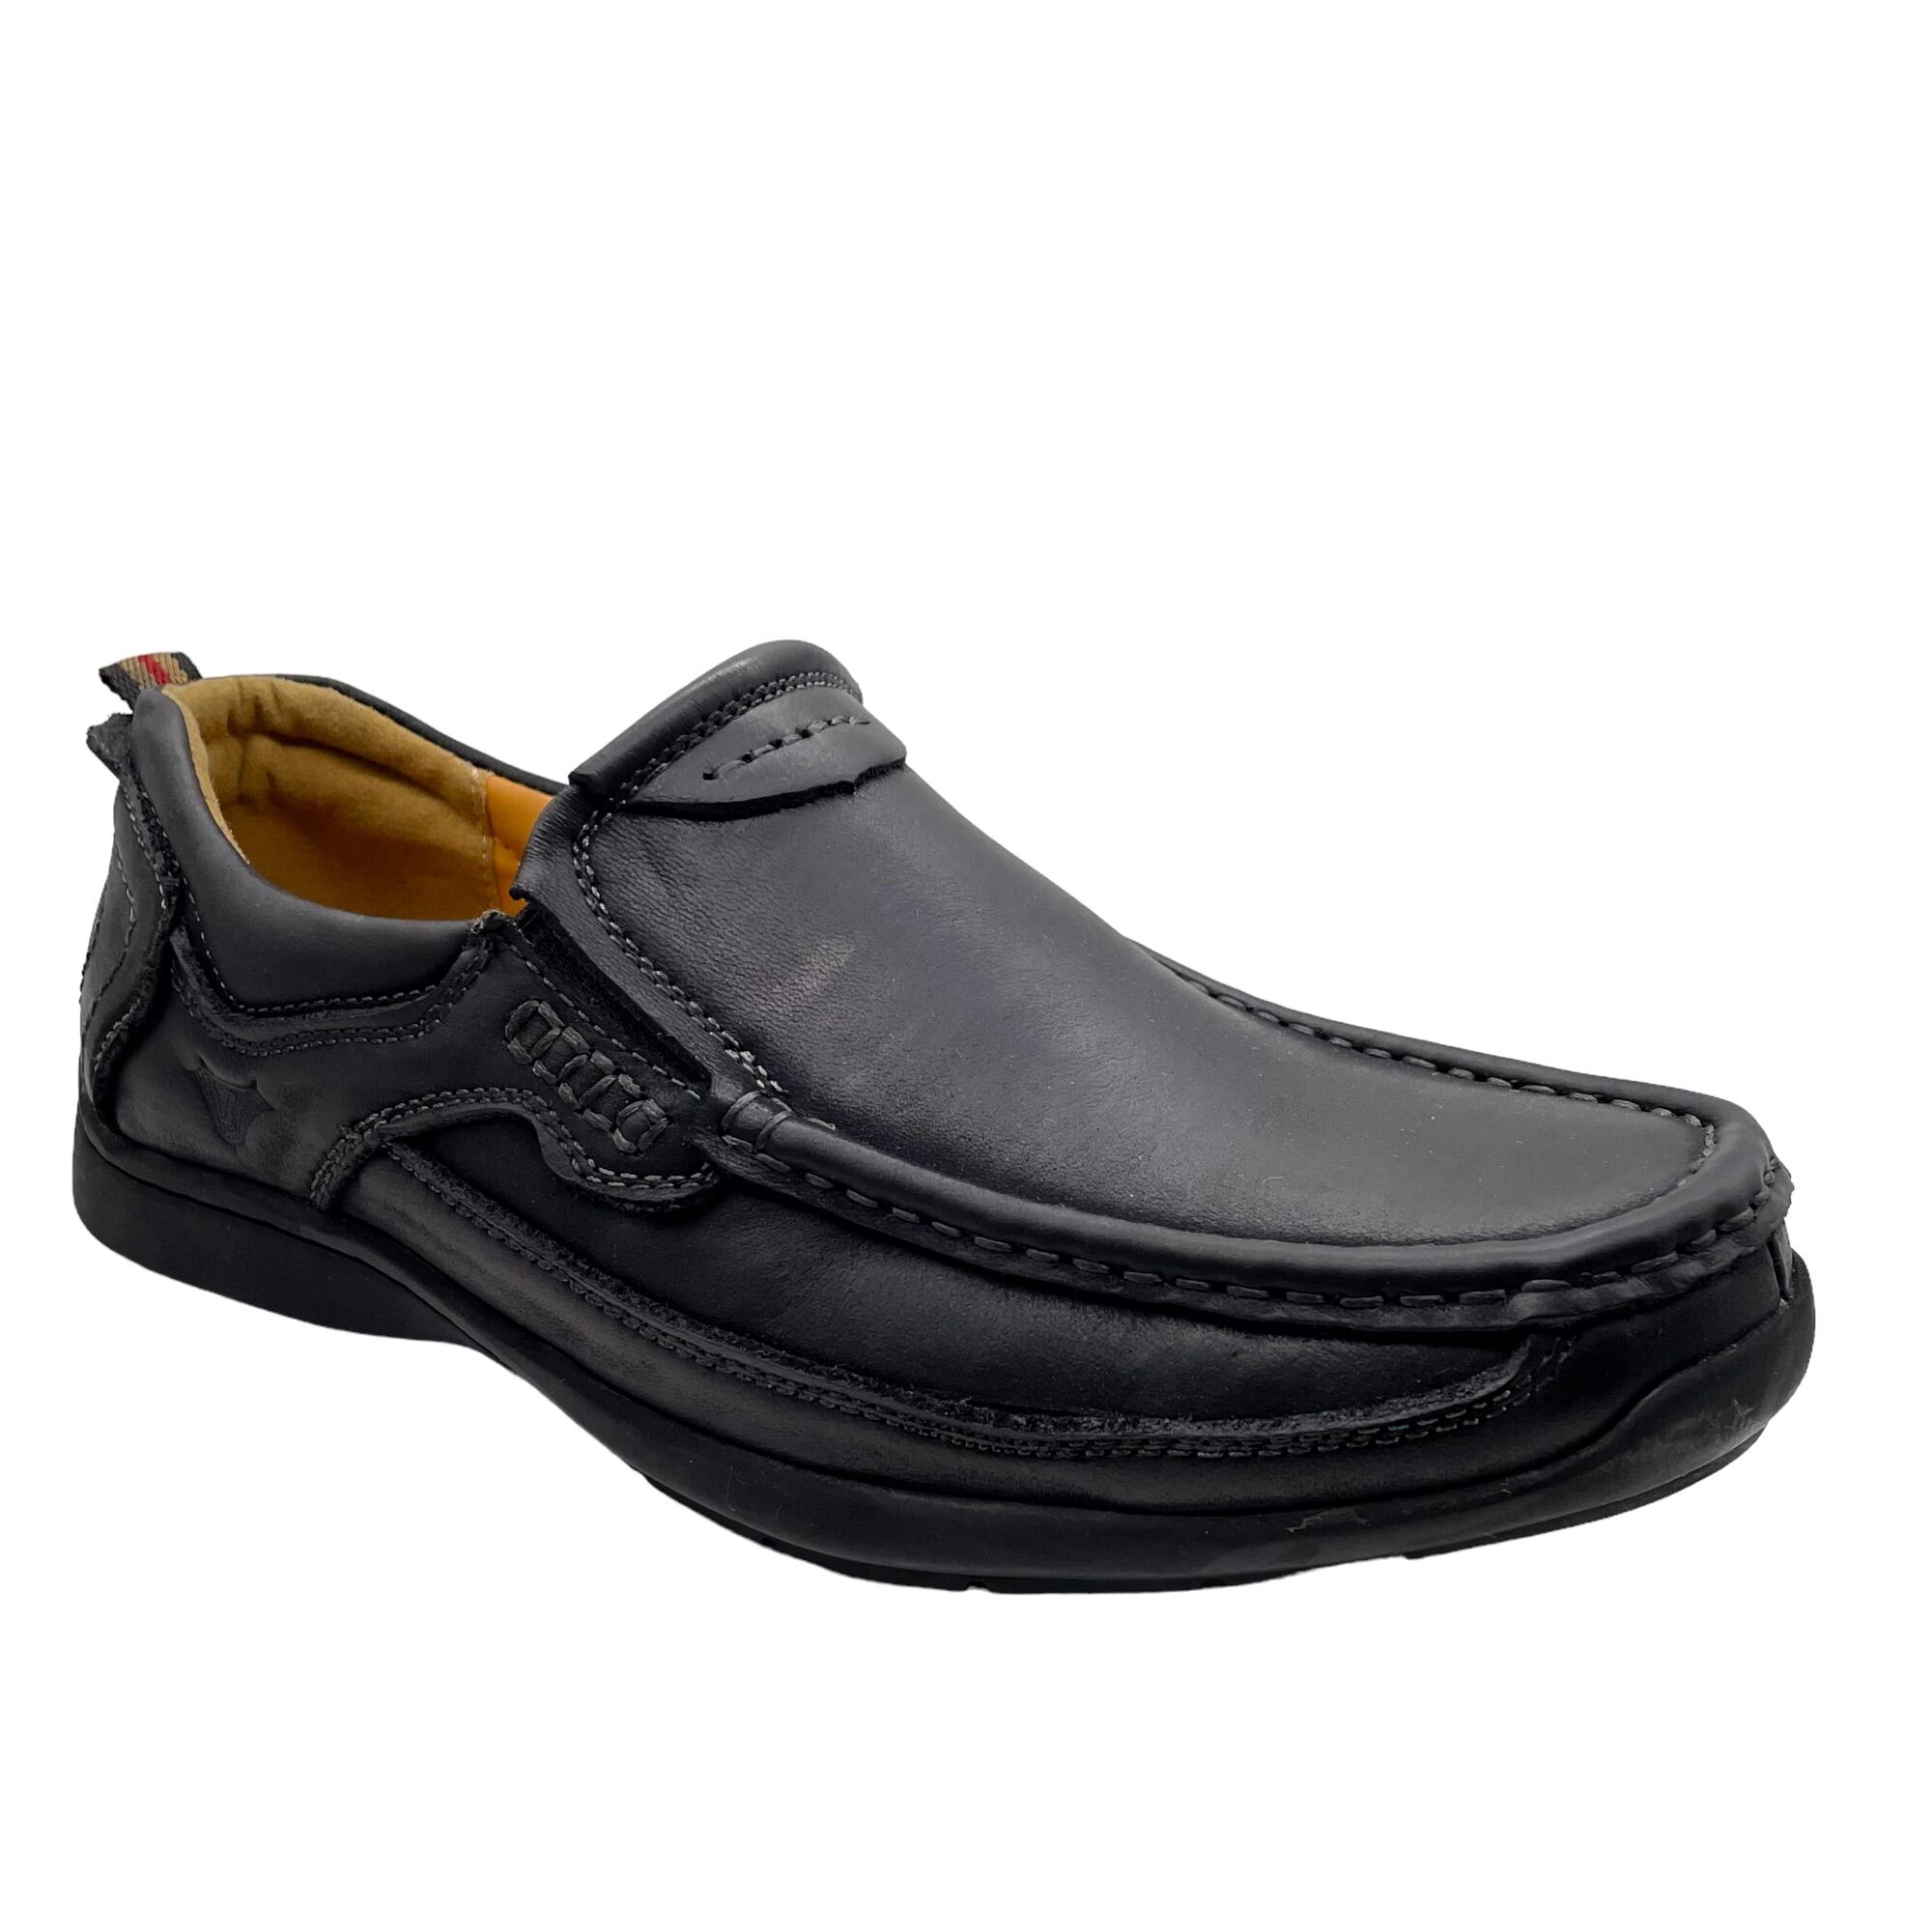 Jungleland Leather Casual Loafer Shoes Men Black / Coffee JL-8011 | Lazada